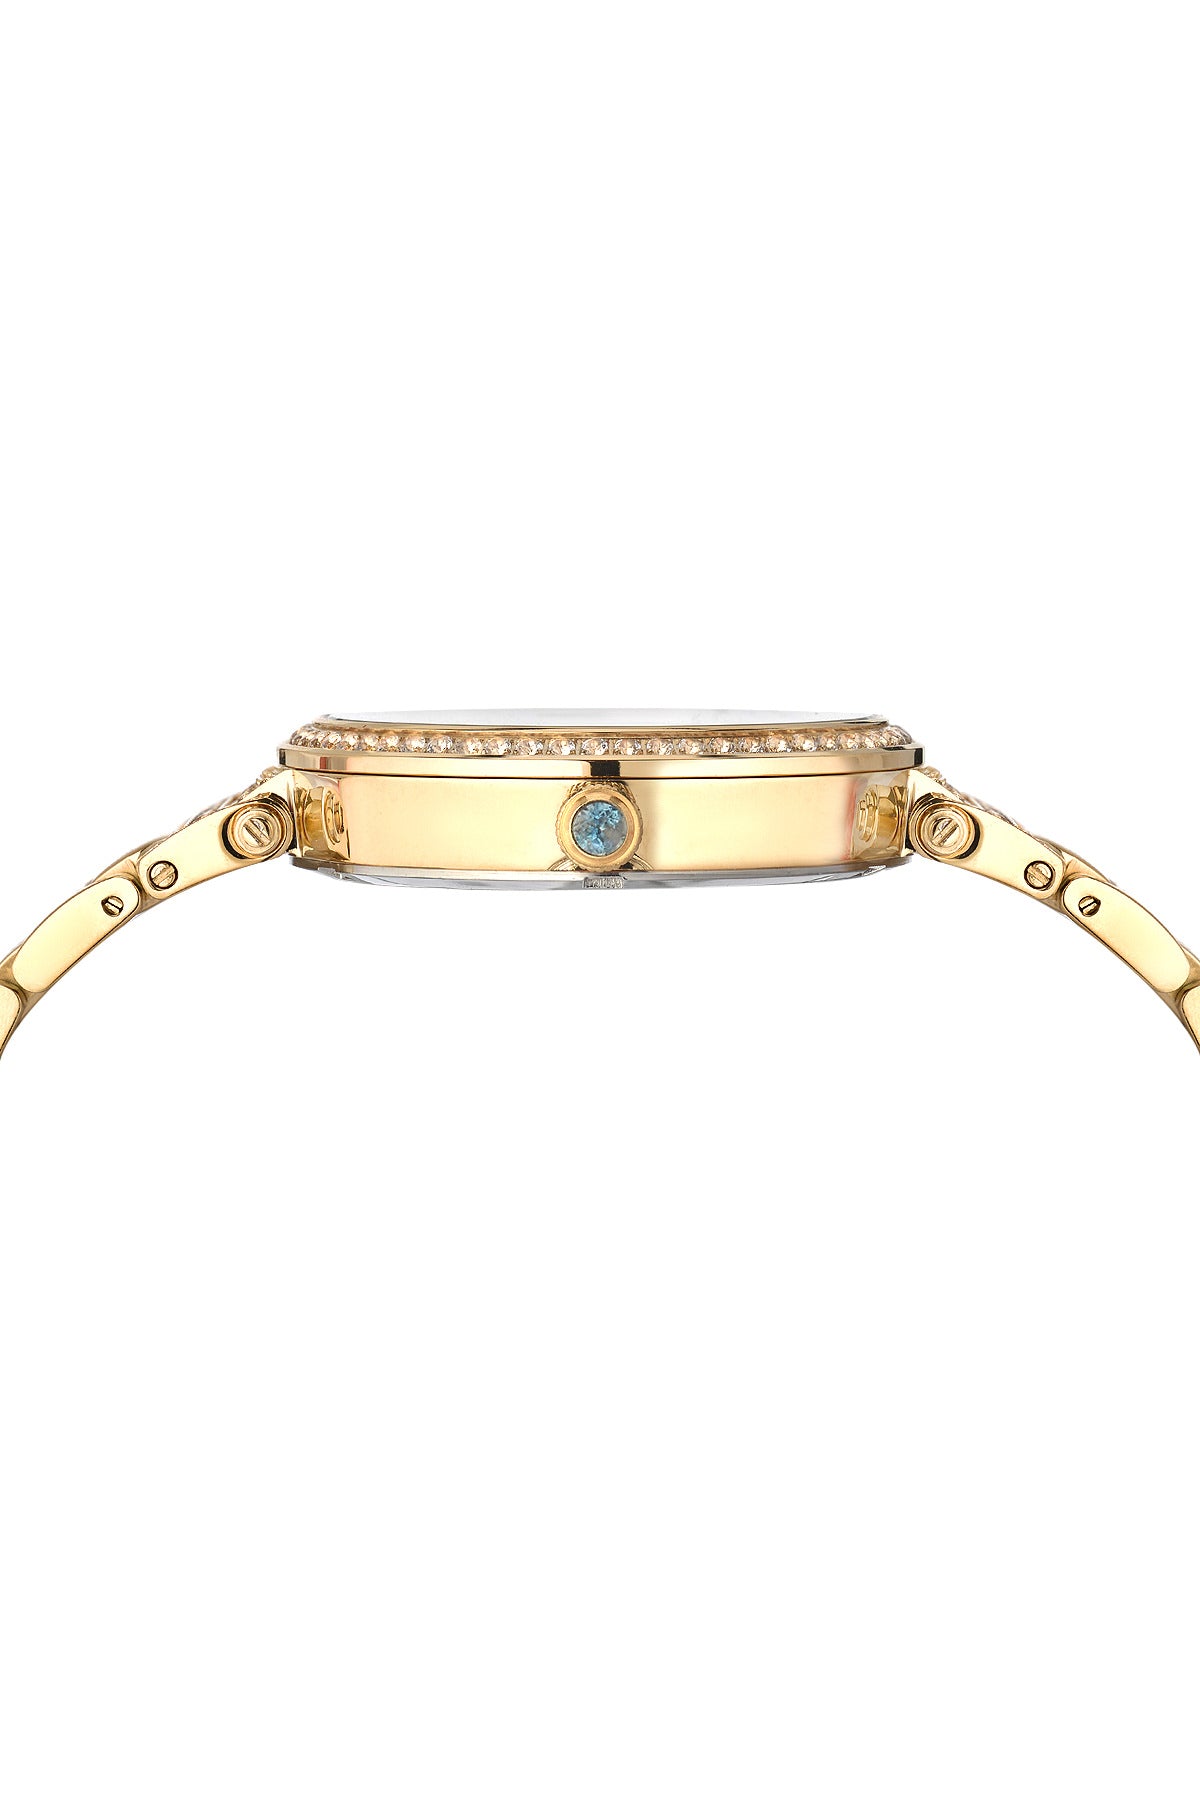 Porsamo Bleu Chantal Luxury Topaz Women's Stainless Steel Watch, Gold, White 671BCHS